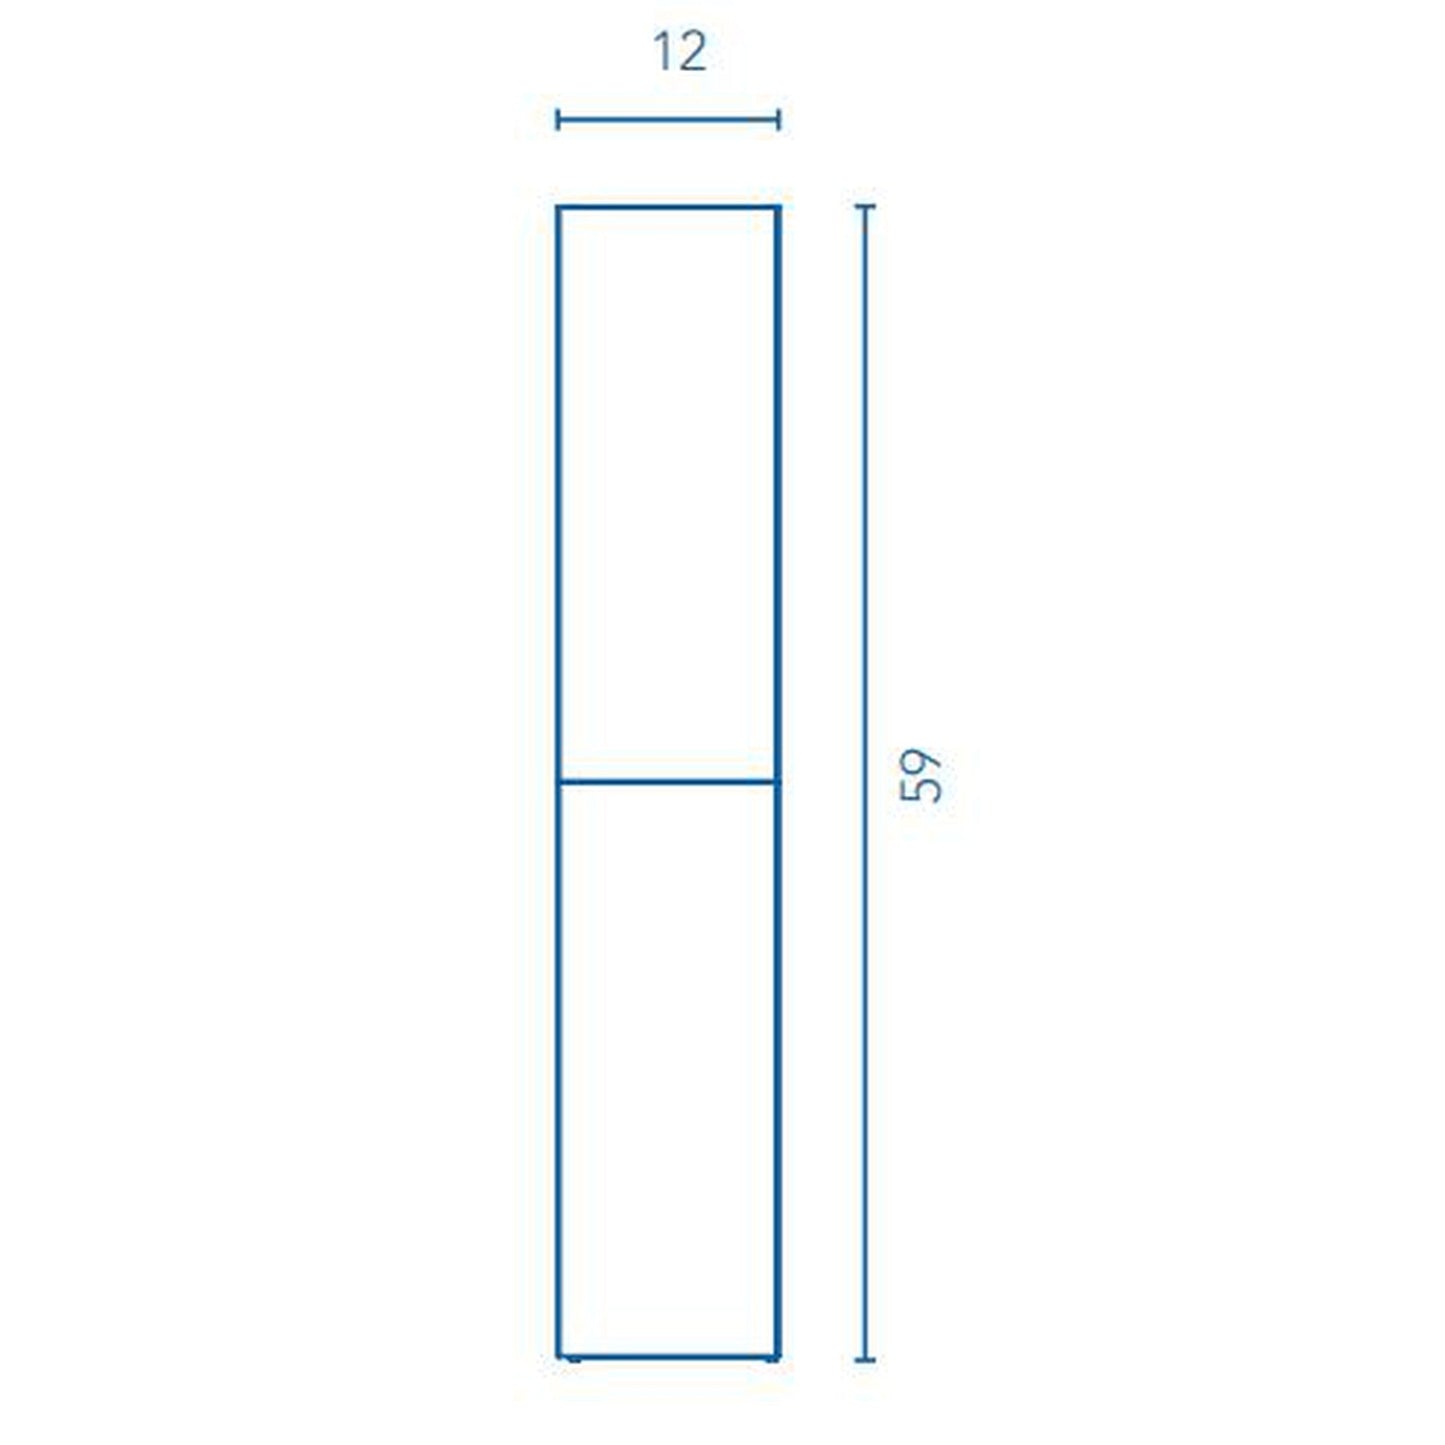 Royo Vida 12" x 59" Toffee Walnut Column With 2 Doors & Adjustable Shelves